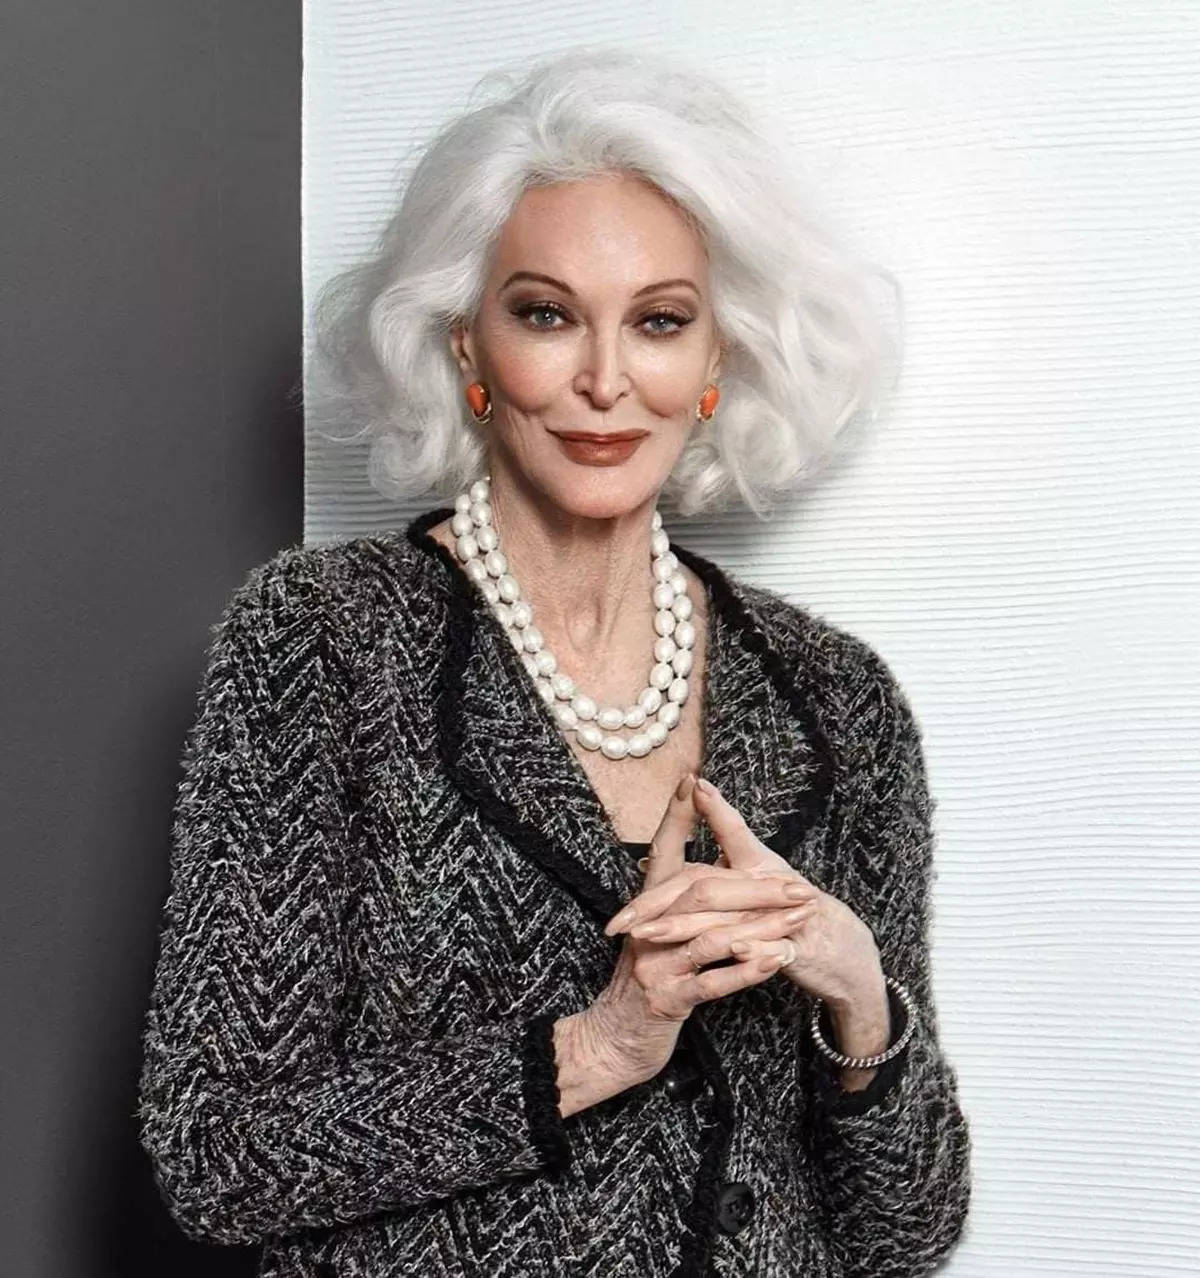 91-year-old Carmen Dell'Orefice, the world's oldest supermodel